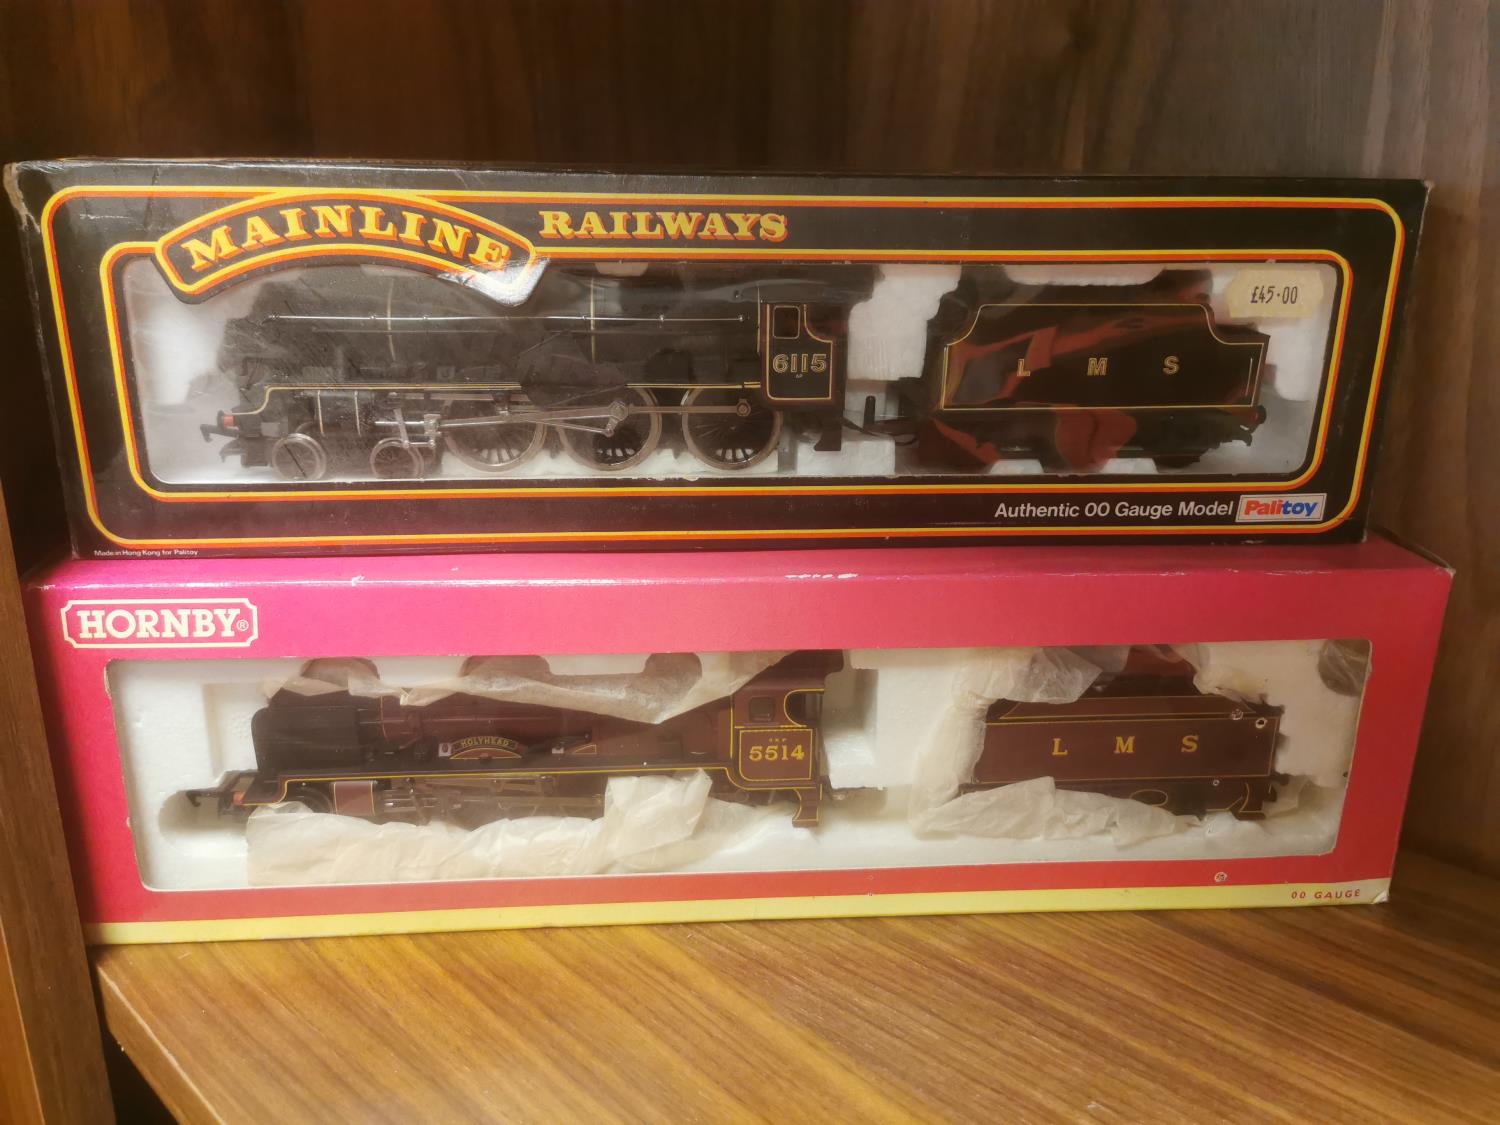 Pair of Railway Toy LMS Loco Trains inc Hornby & Mainline